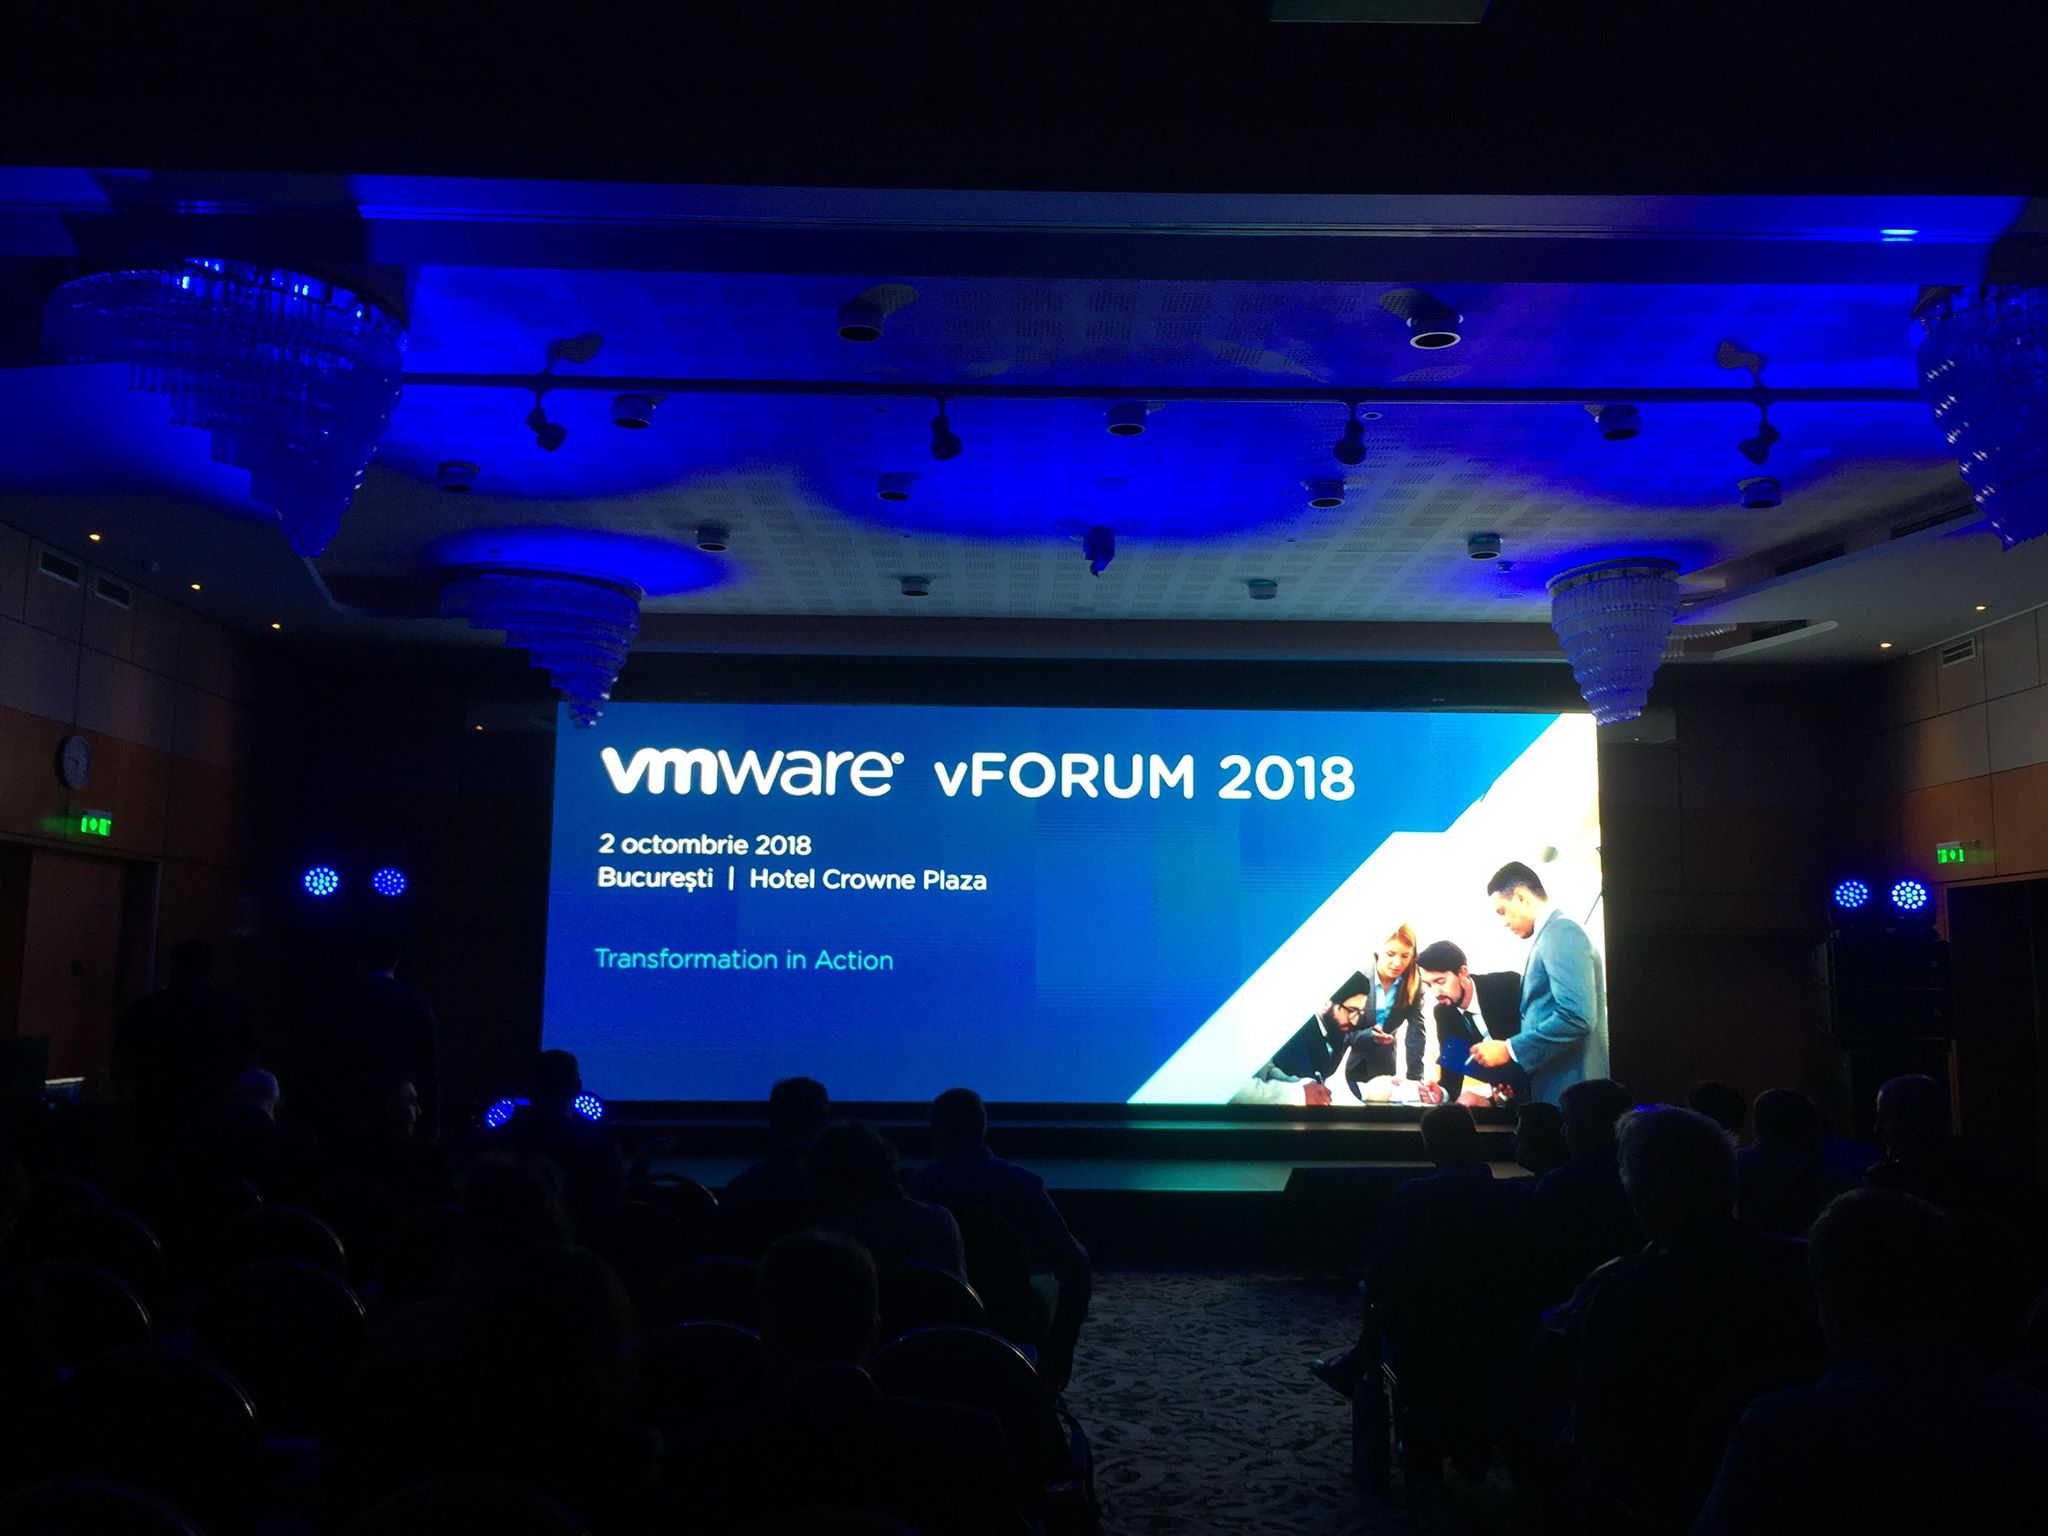 Conferinta VM Ware Forum 2018 Crown Plaza Setup Scena Sunet Lumini